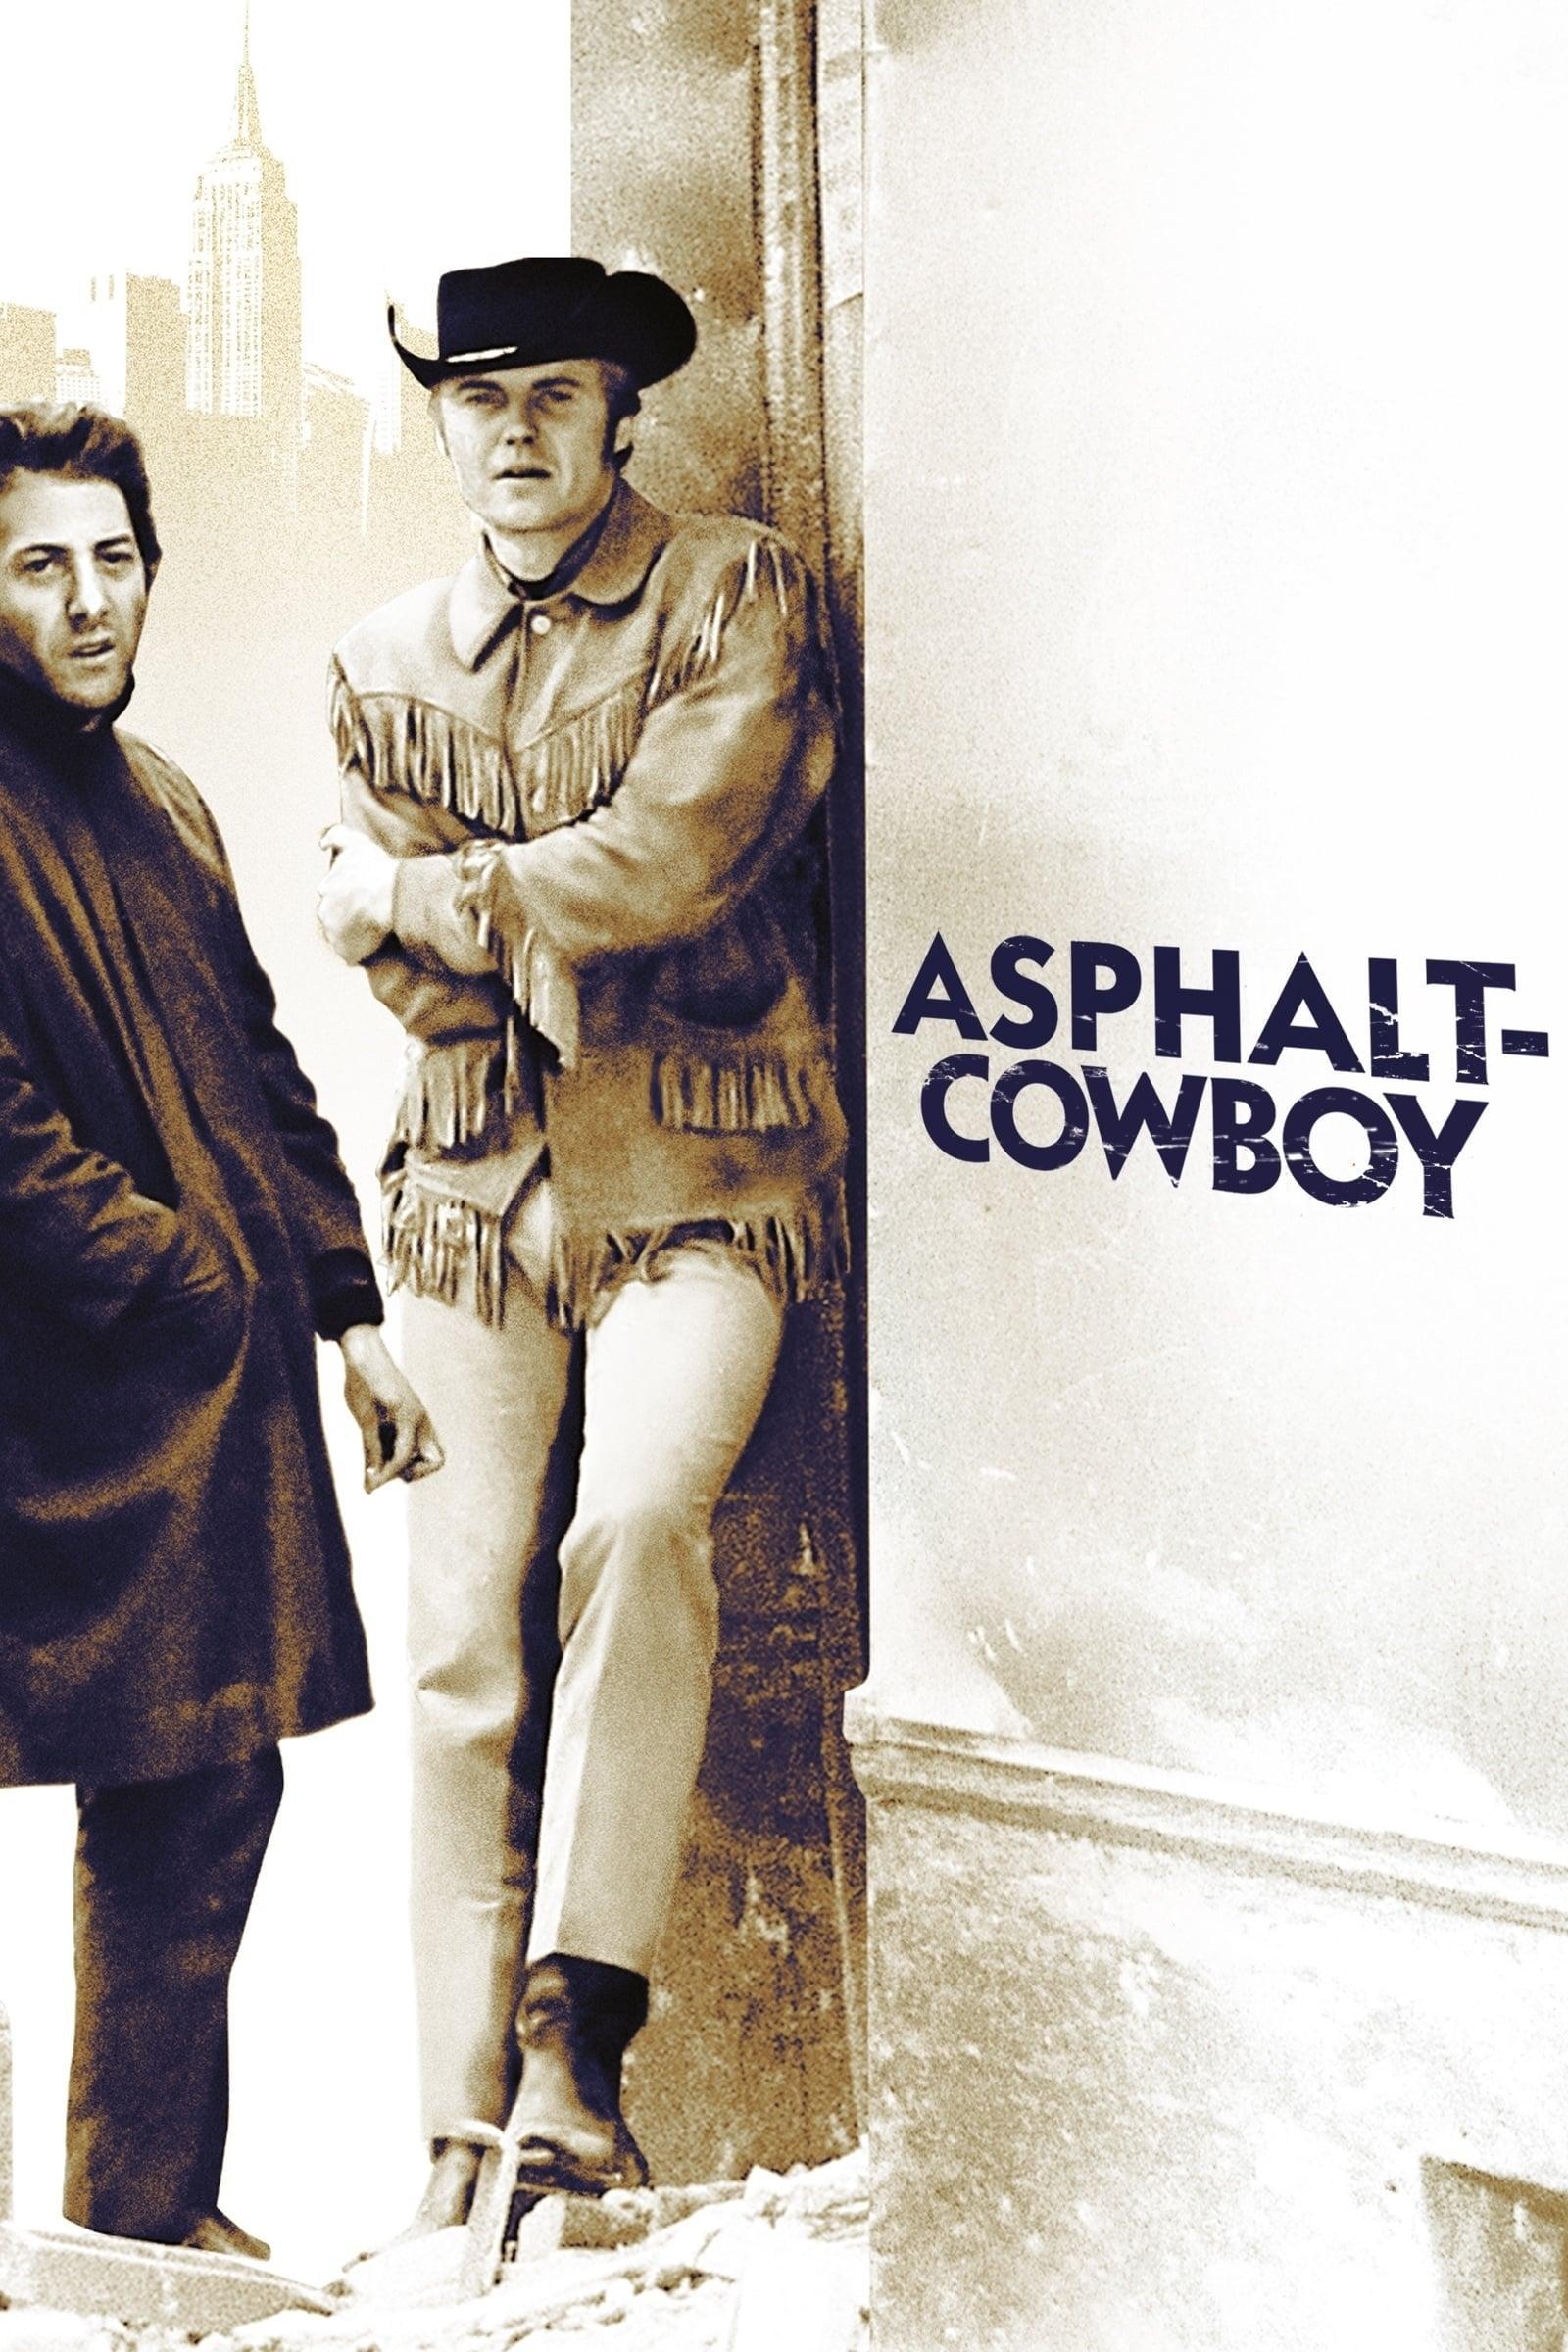 Asphalt-Cowboy poster